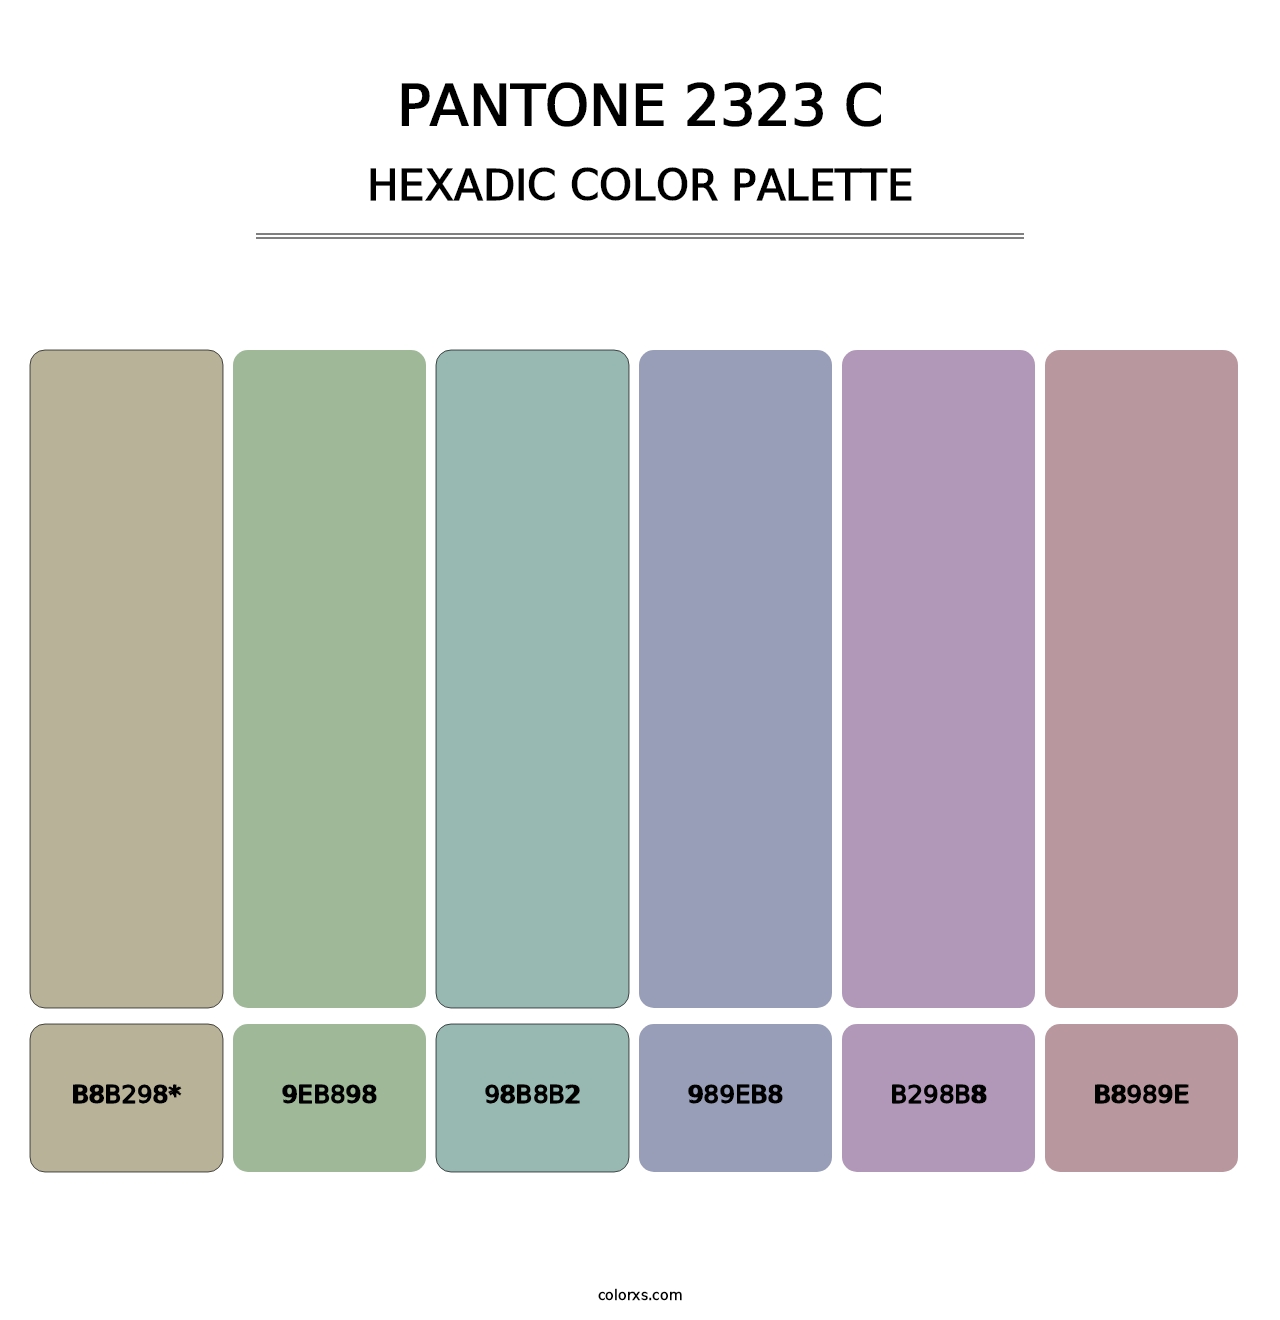 PANTONE 2323 C - Hexadic Color Palette